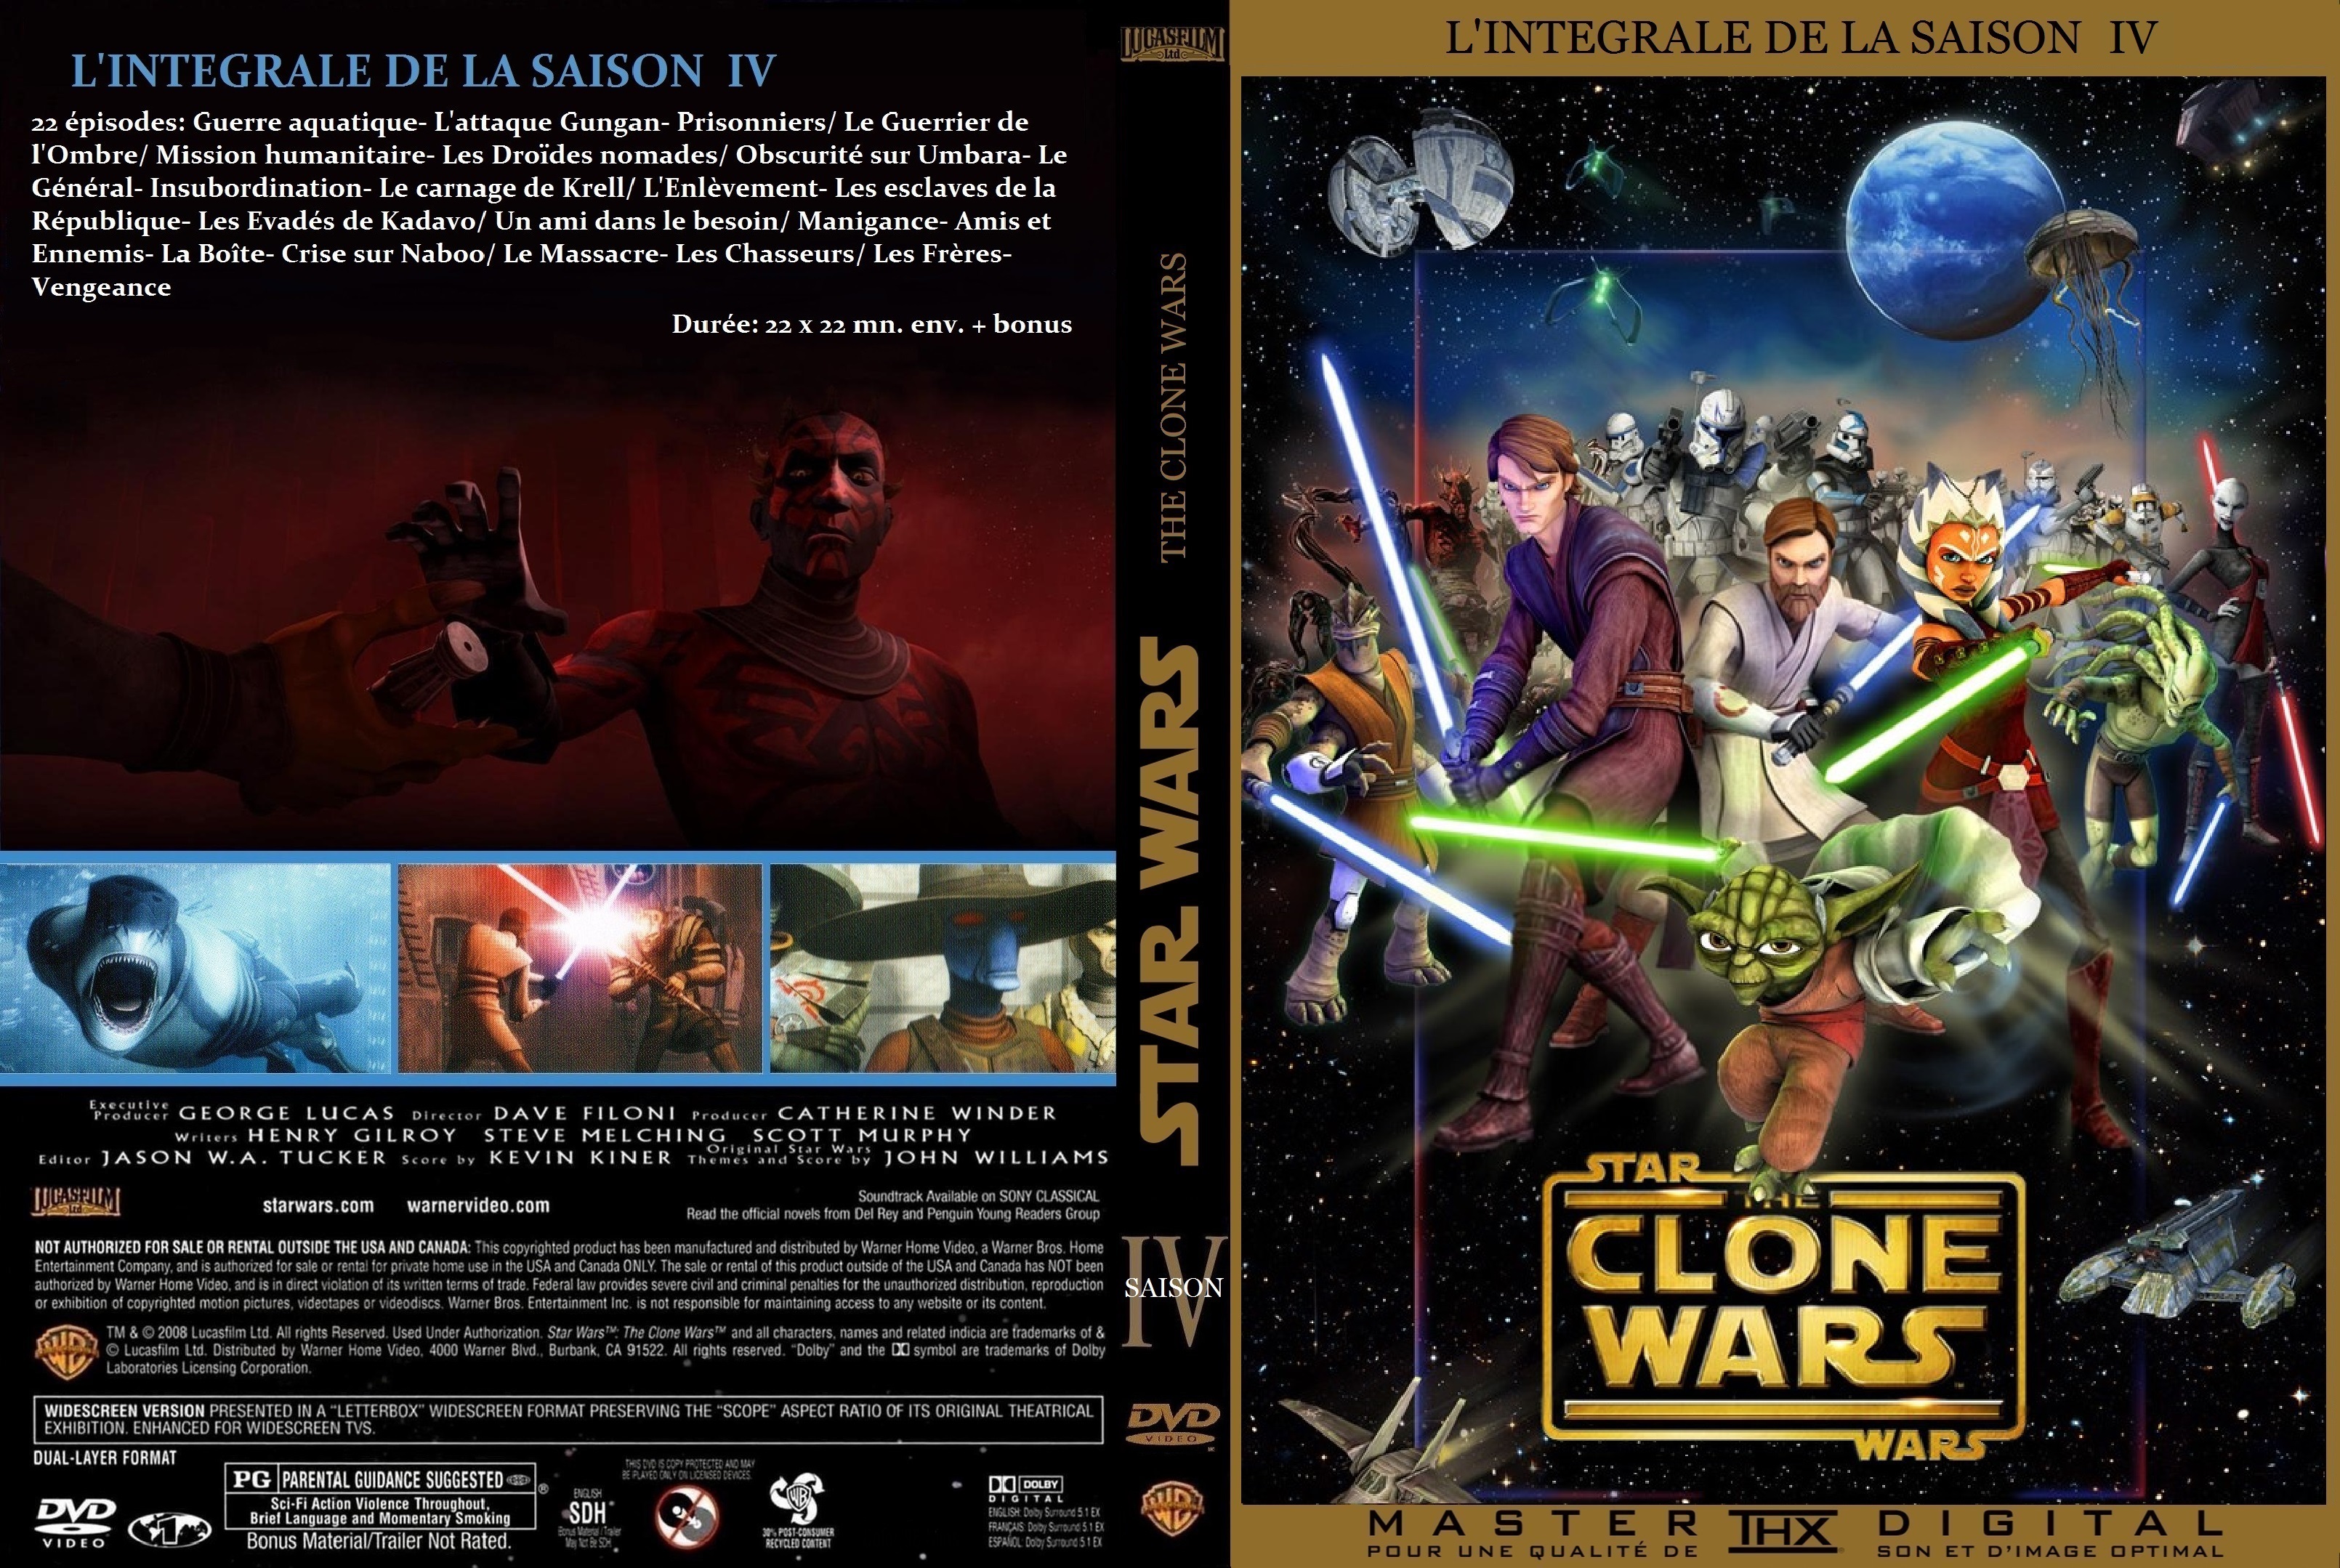 Jaquette DVD Star Wars The Clone Wars Saison 4 custom